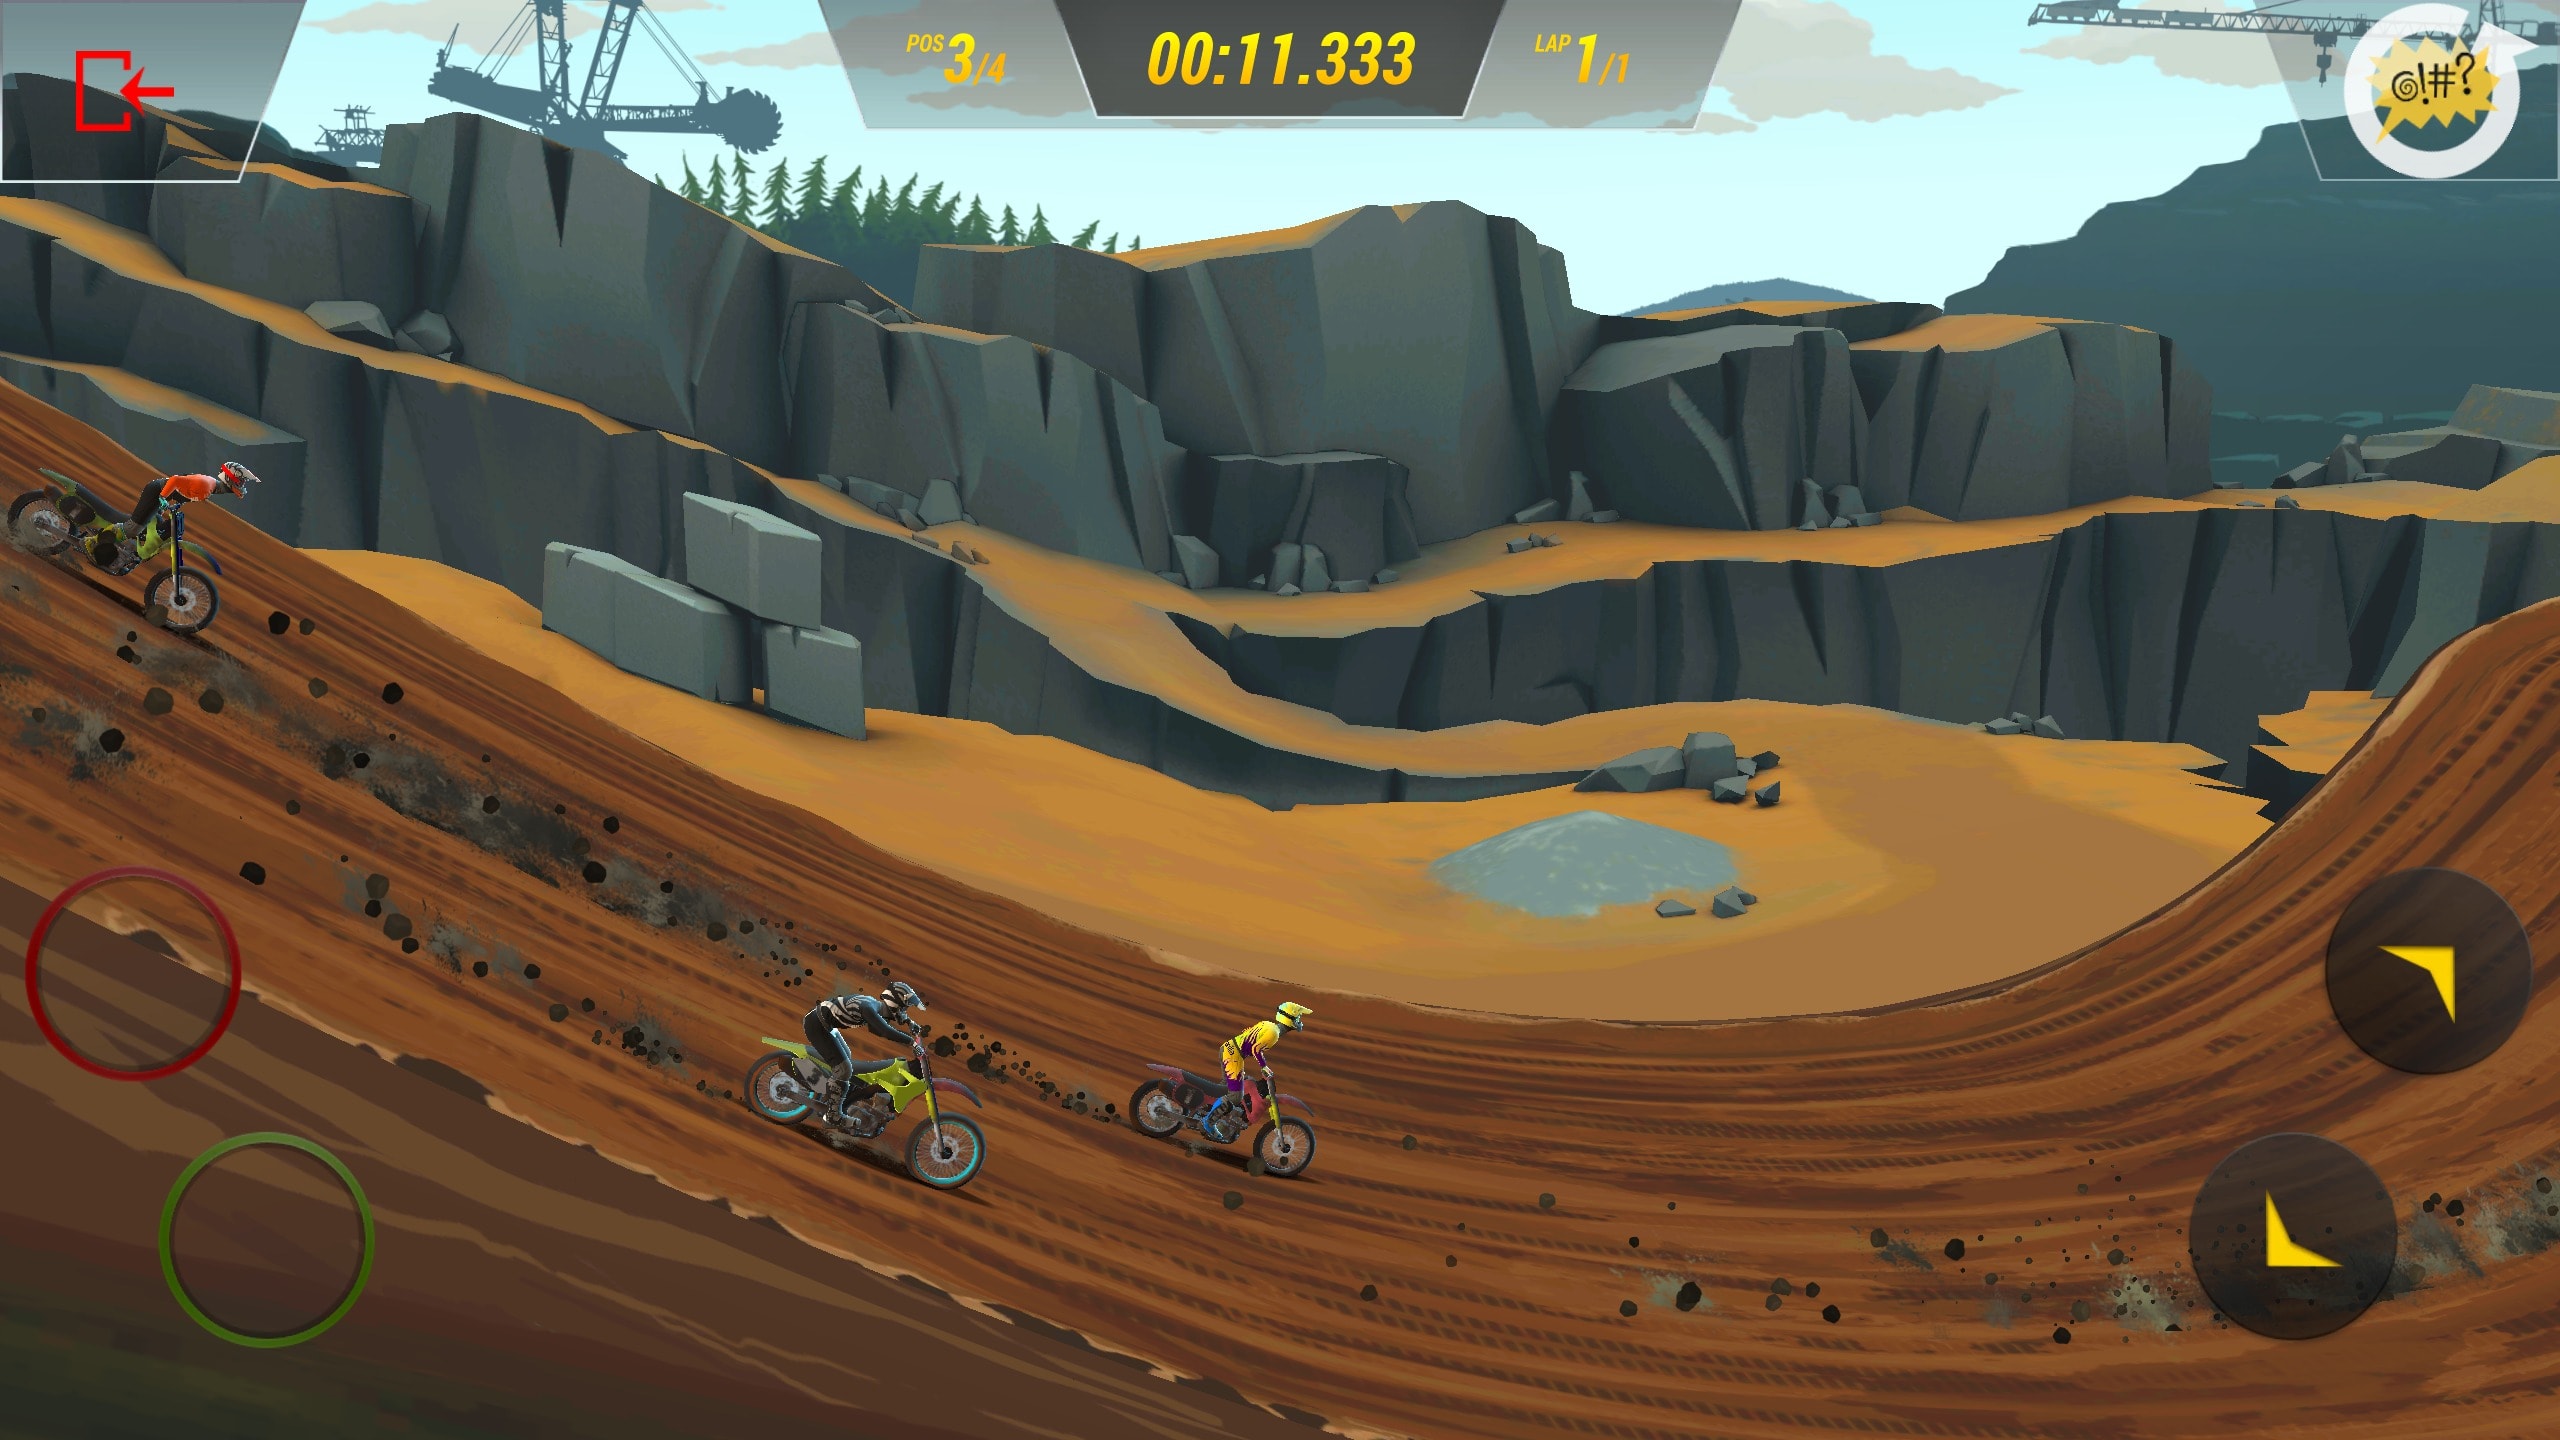 Mad Skills Motocross 3 - Apps on Google Play